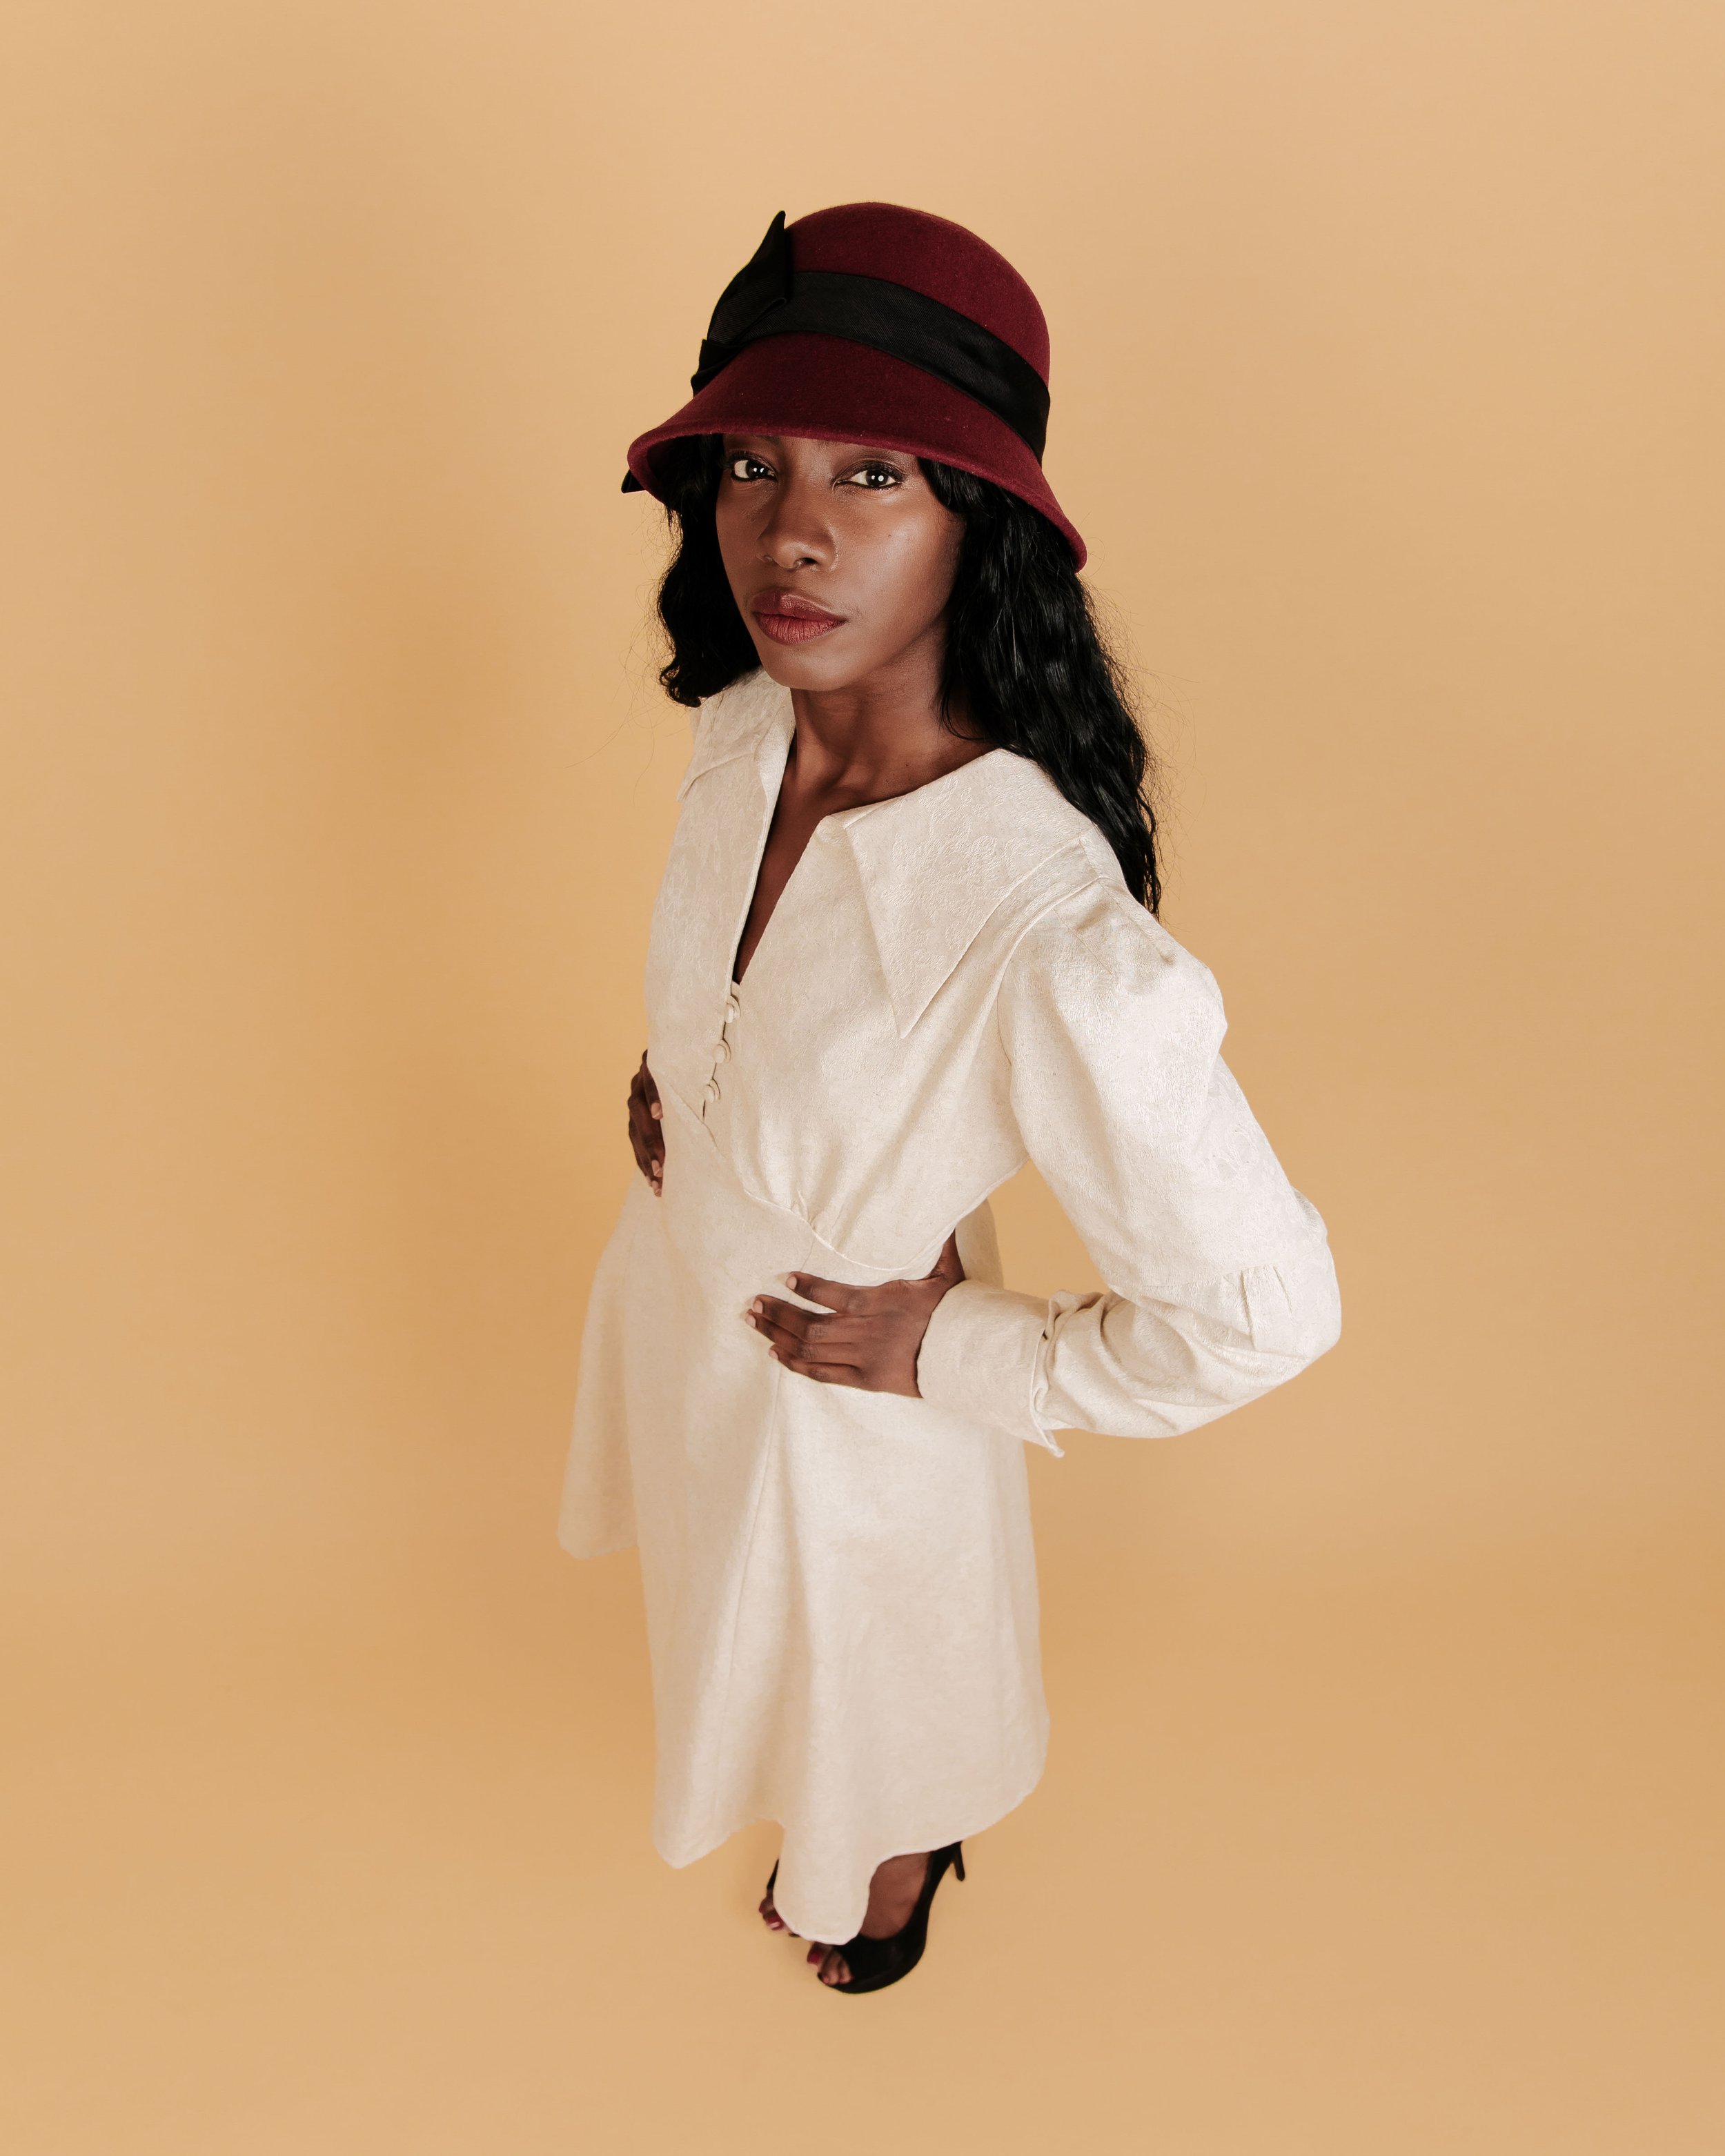 Terre_Amoure_Cream_Dress_Red_Hat_Model_Bespoke_Dress.jpg